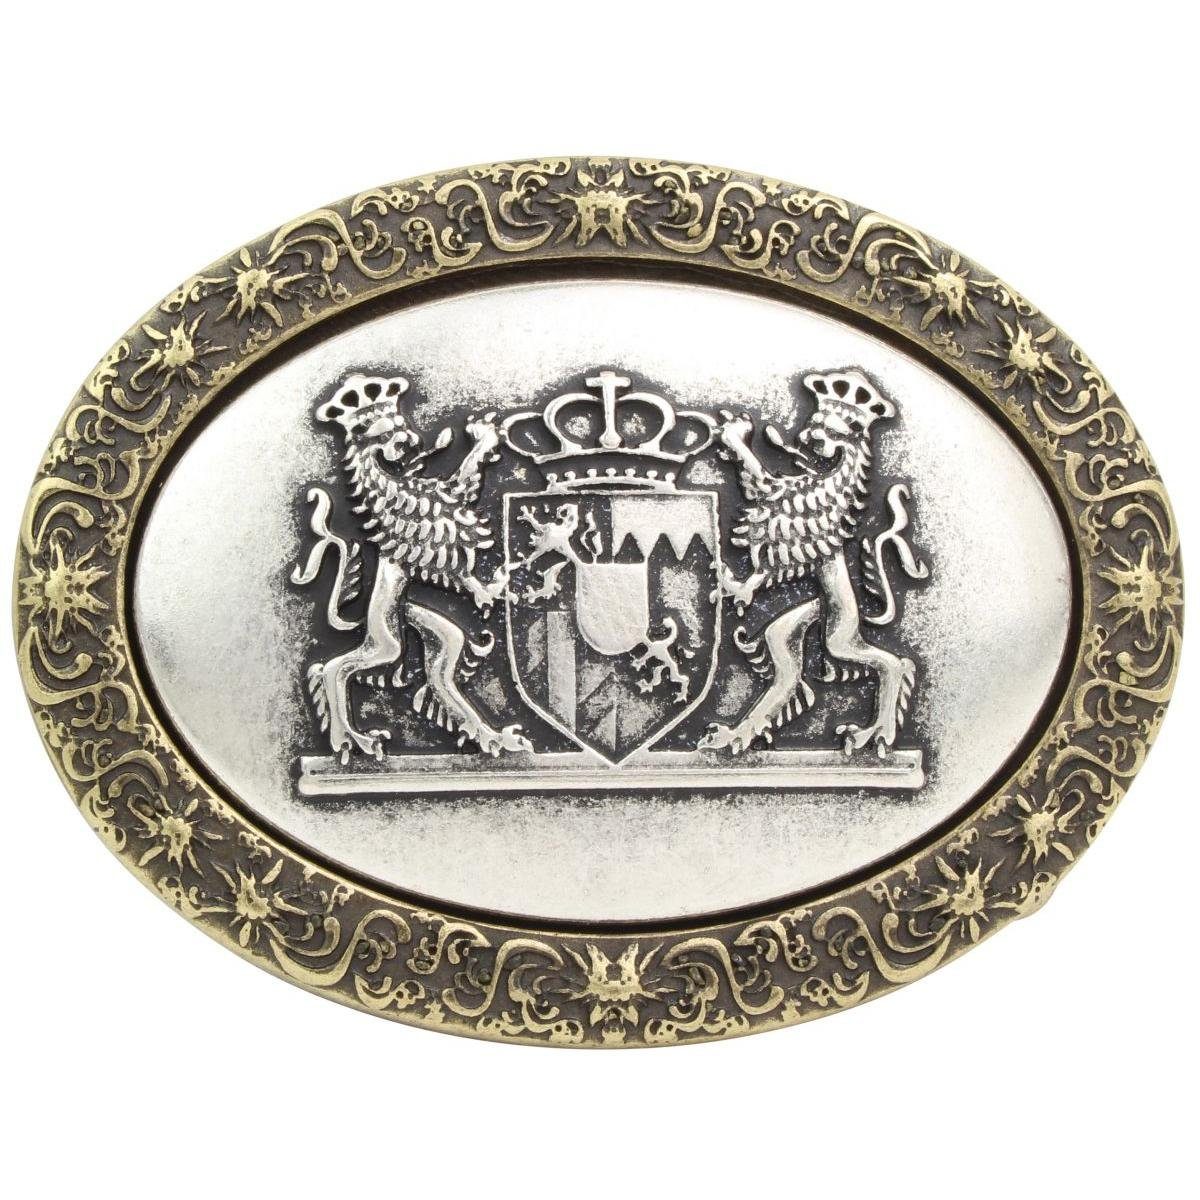 BELTINGER Gürtelschnalle Wappen Bayern 4,0 cm - Buckle Wechselschließe Gürtelschließe 40mm - Fü bicolor g/s | Gürtelschnallen